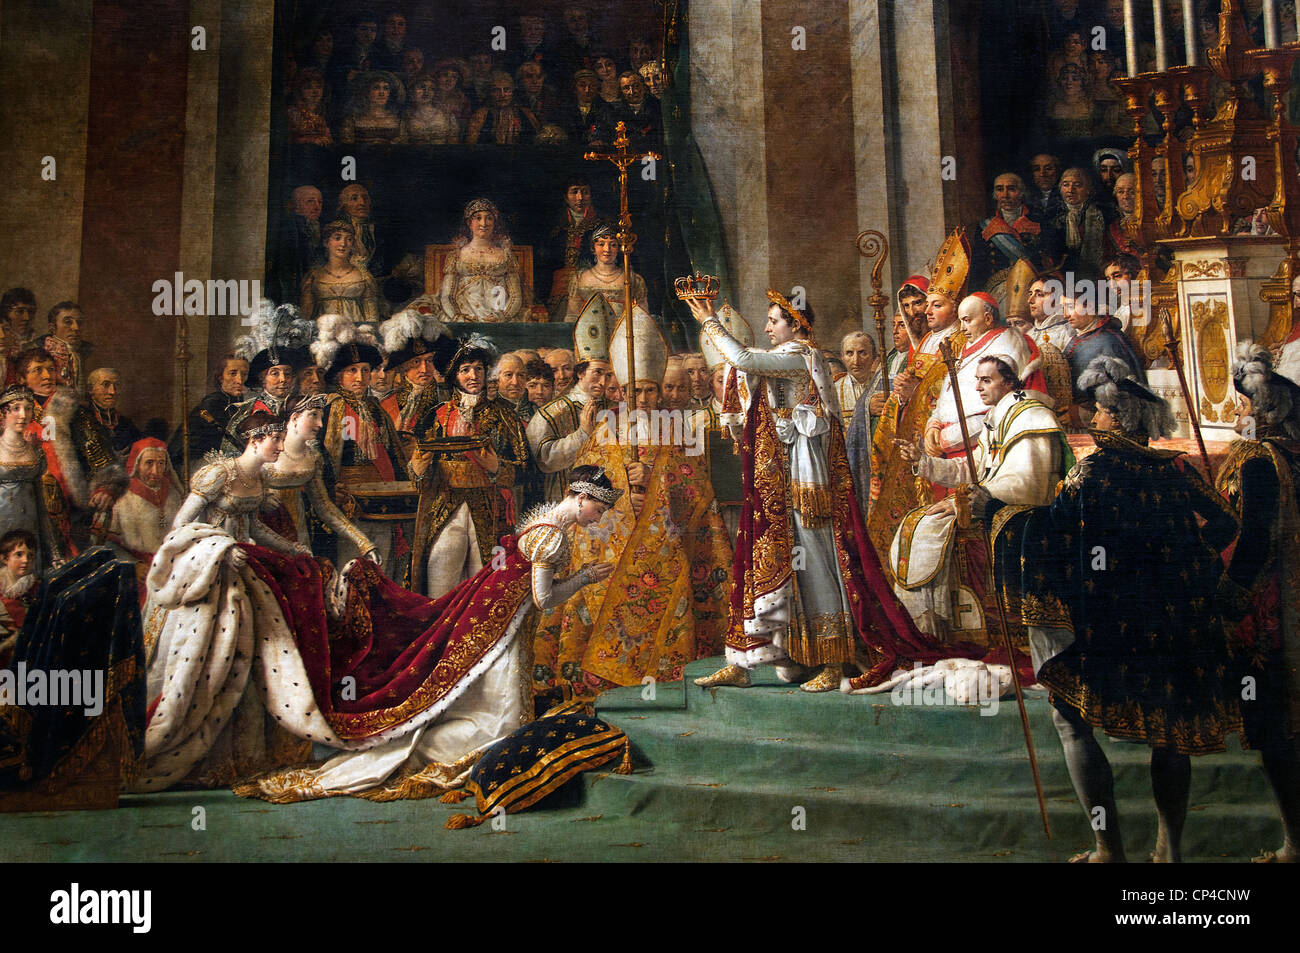 Louis XIV, Napoleon, and Macron: The Choreography of Portraits